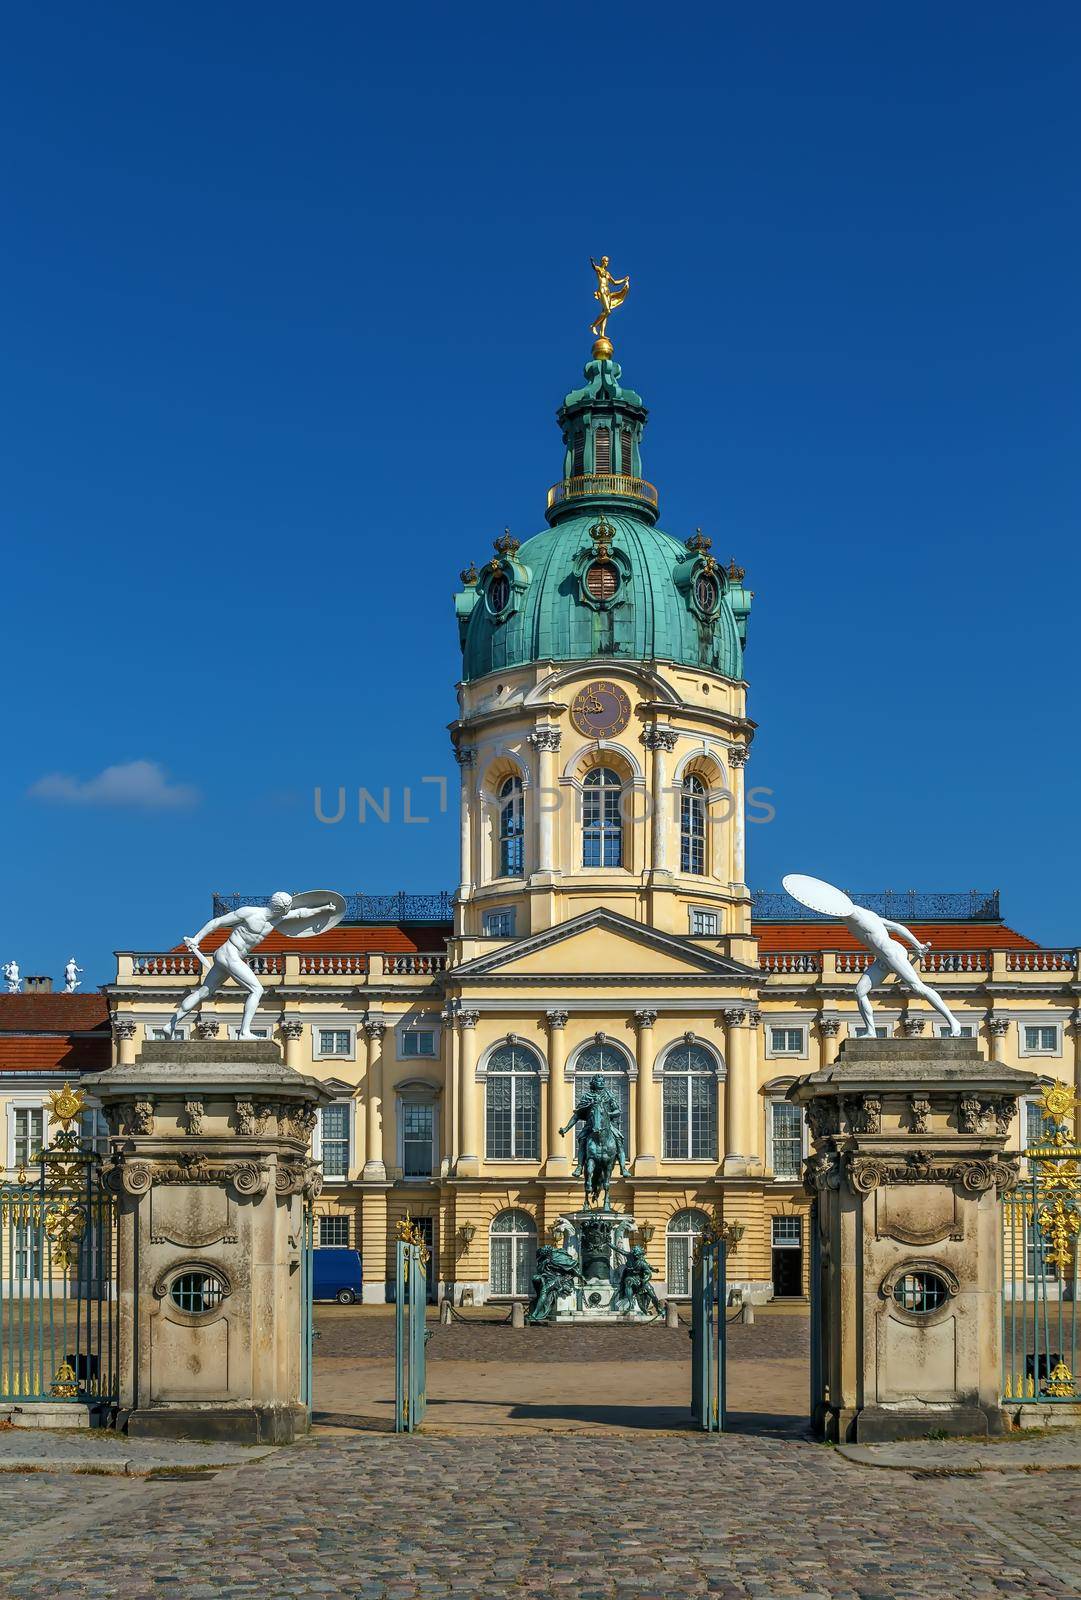 Charlottenburg Palace, Berlin, Germany by borisb17